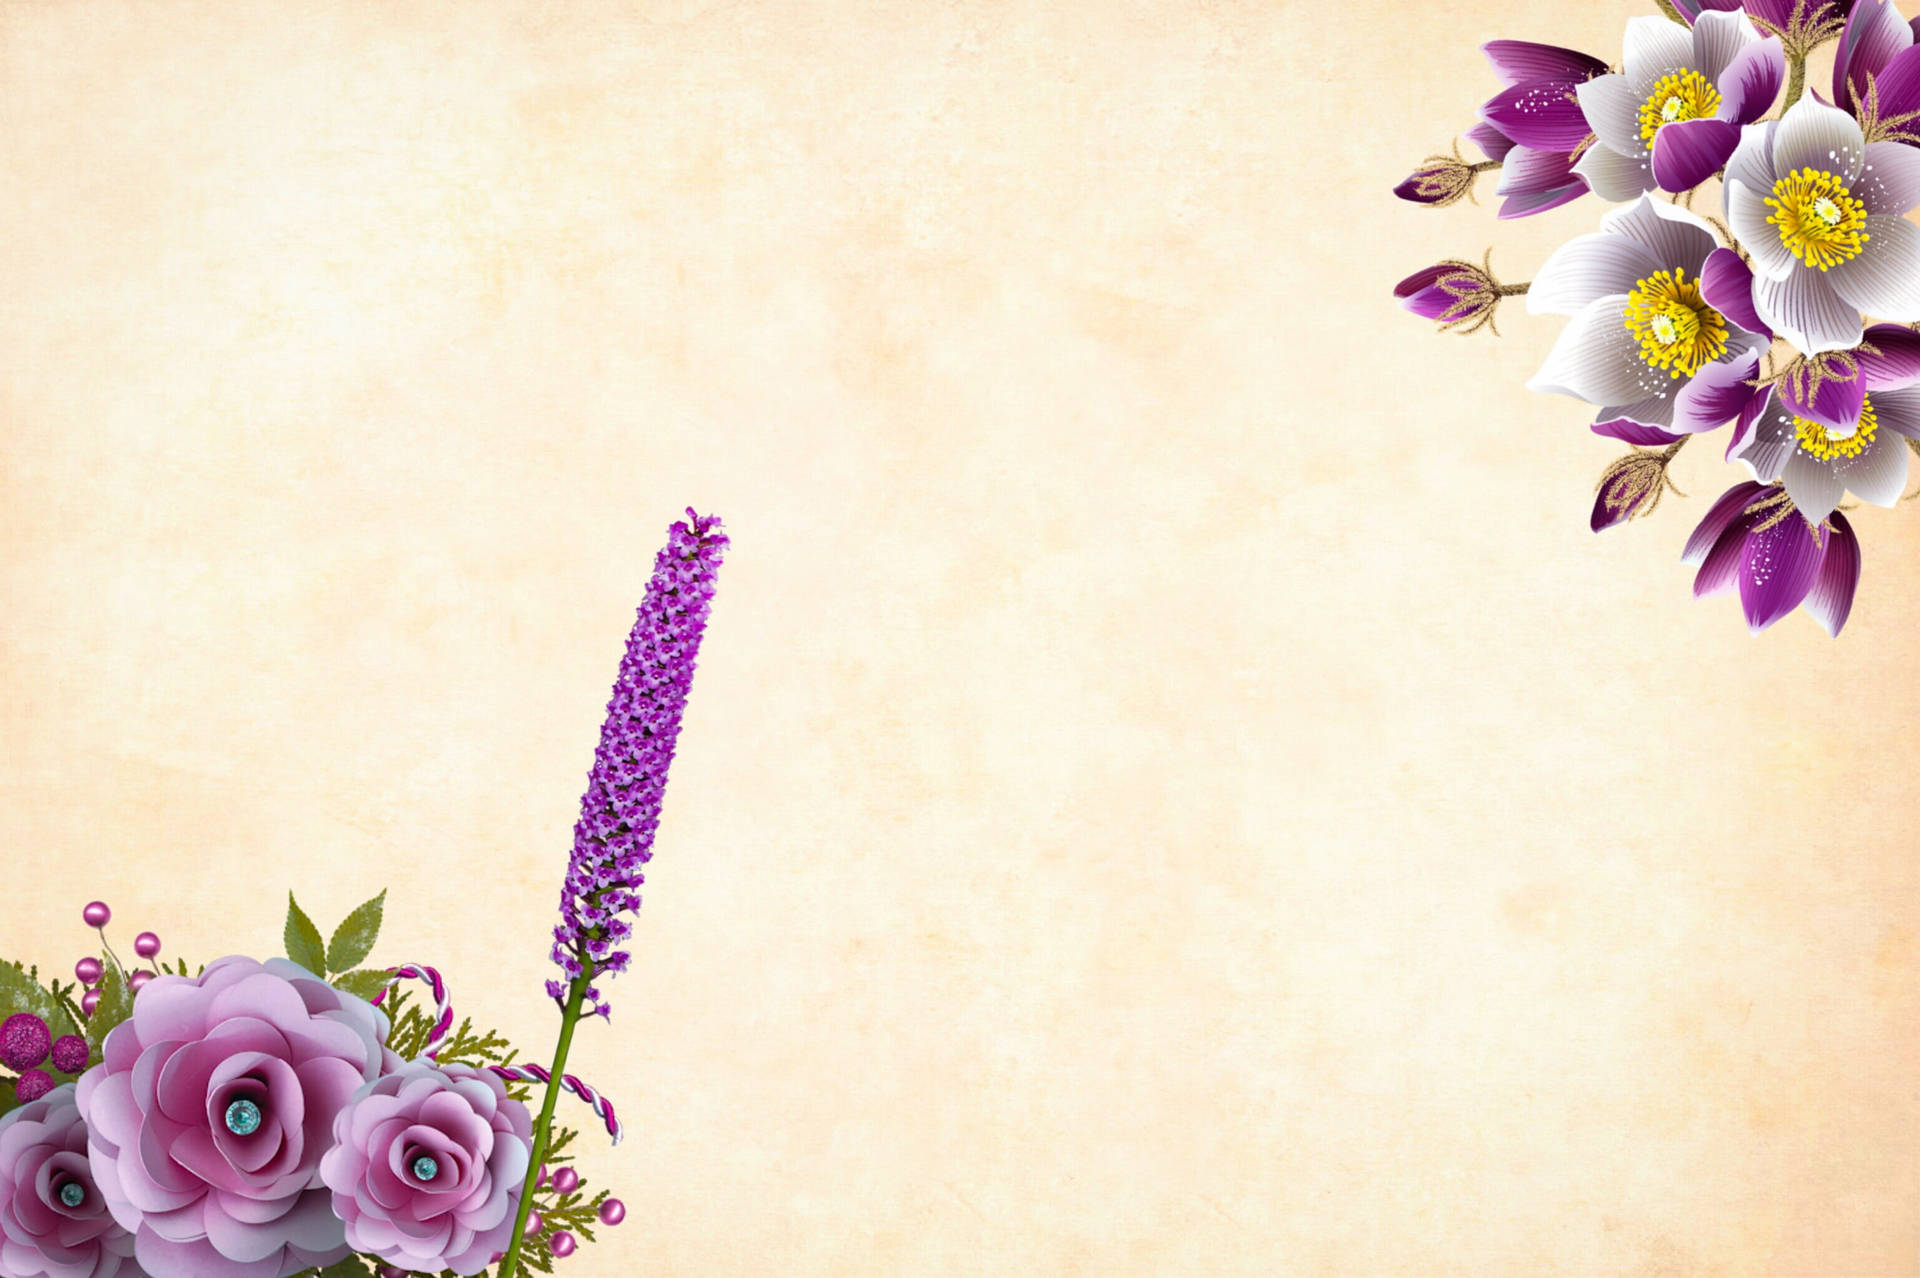 Background Design With Violet Flowers Wallpaper